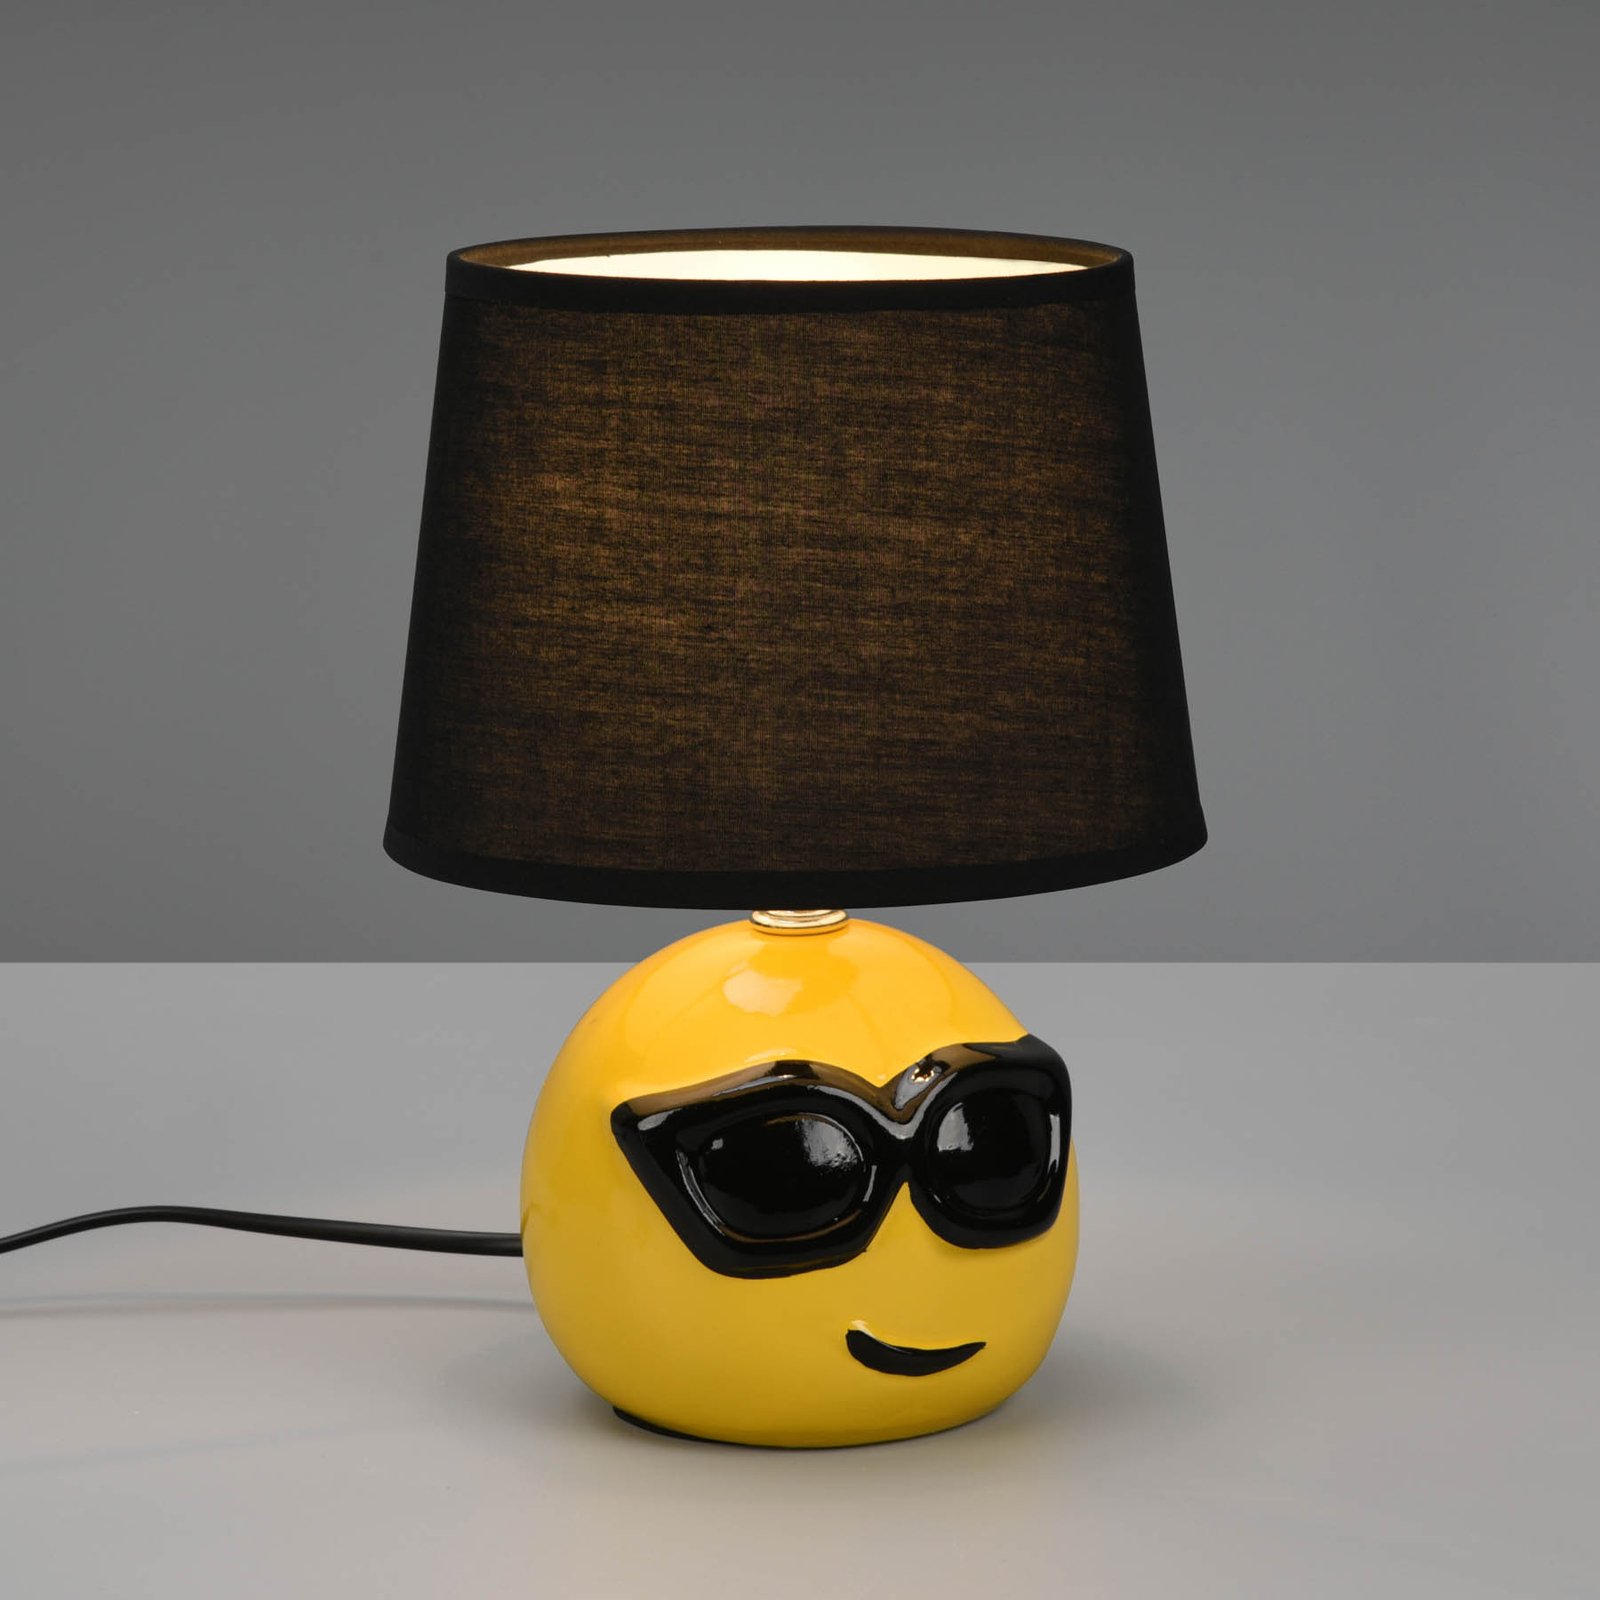 Bordslampa Coolio med smiley, tygskärm svart